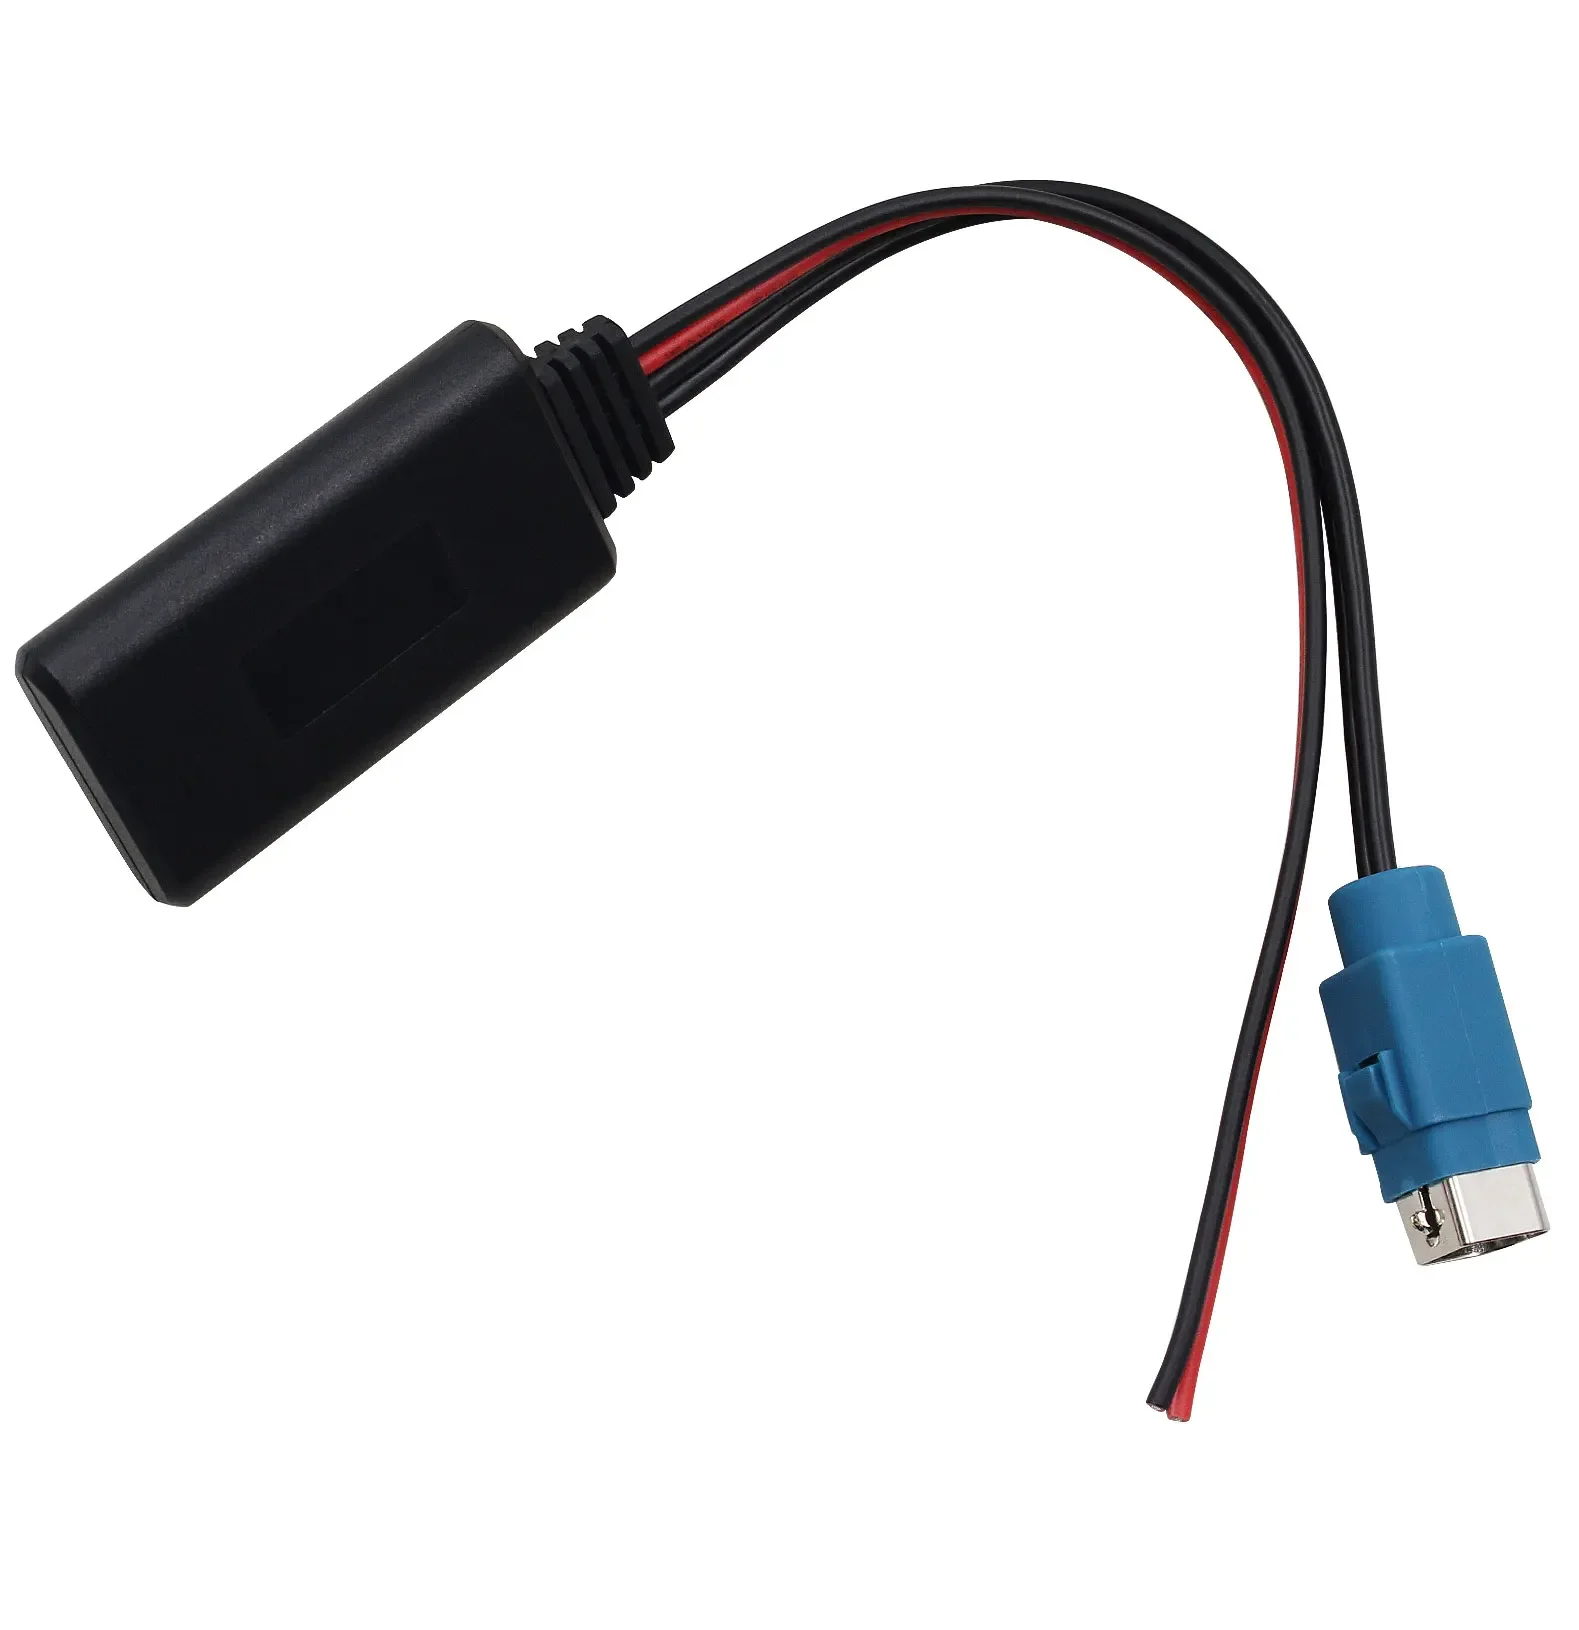 Autoestéreo Alpine CDE-101RM con USB y bluetooth